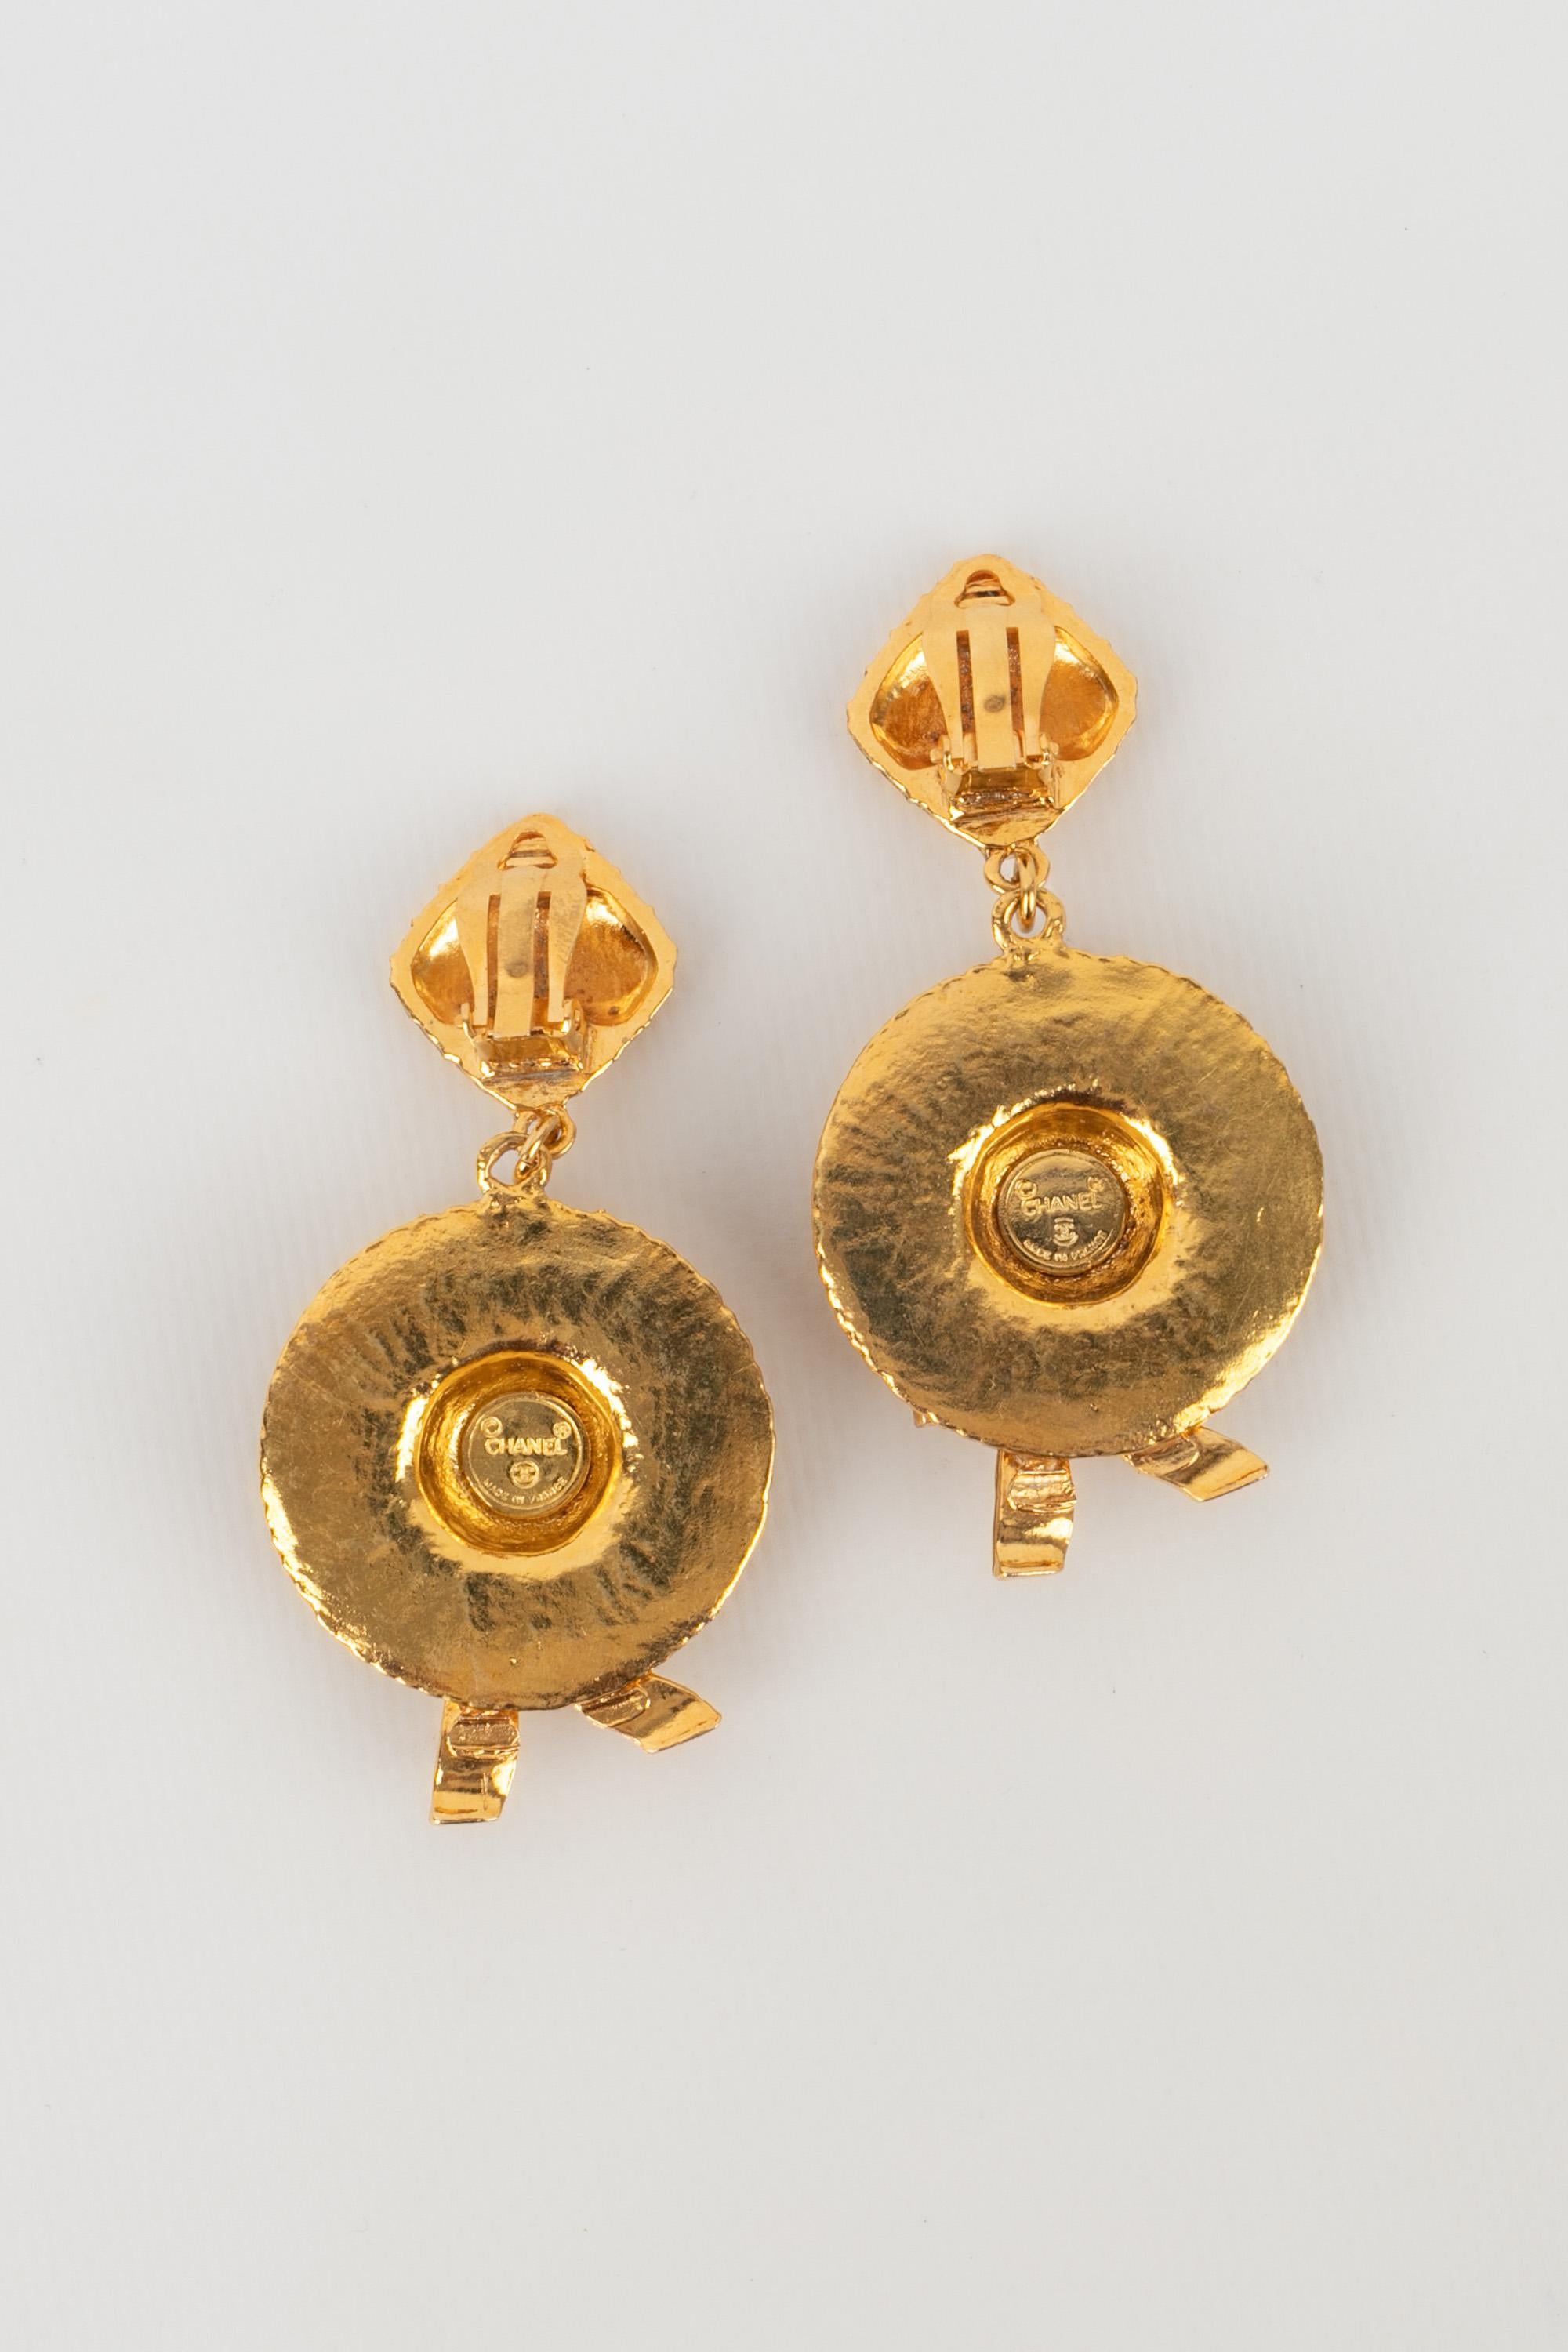 Chanel golden earrings In Excellent Condition For Sale In SAINT-OUEN-SUR-SEINE, FR